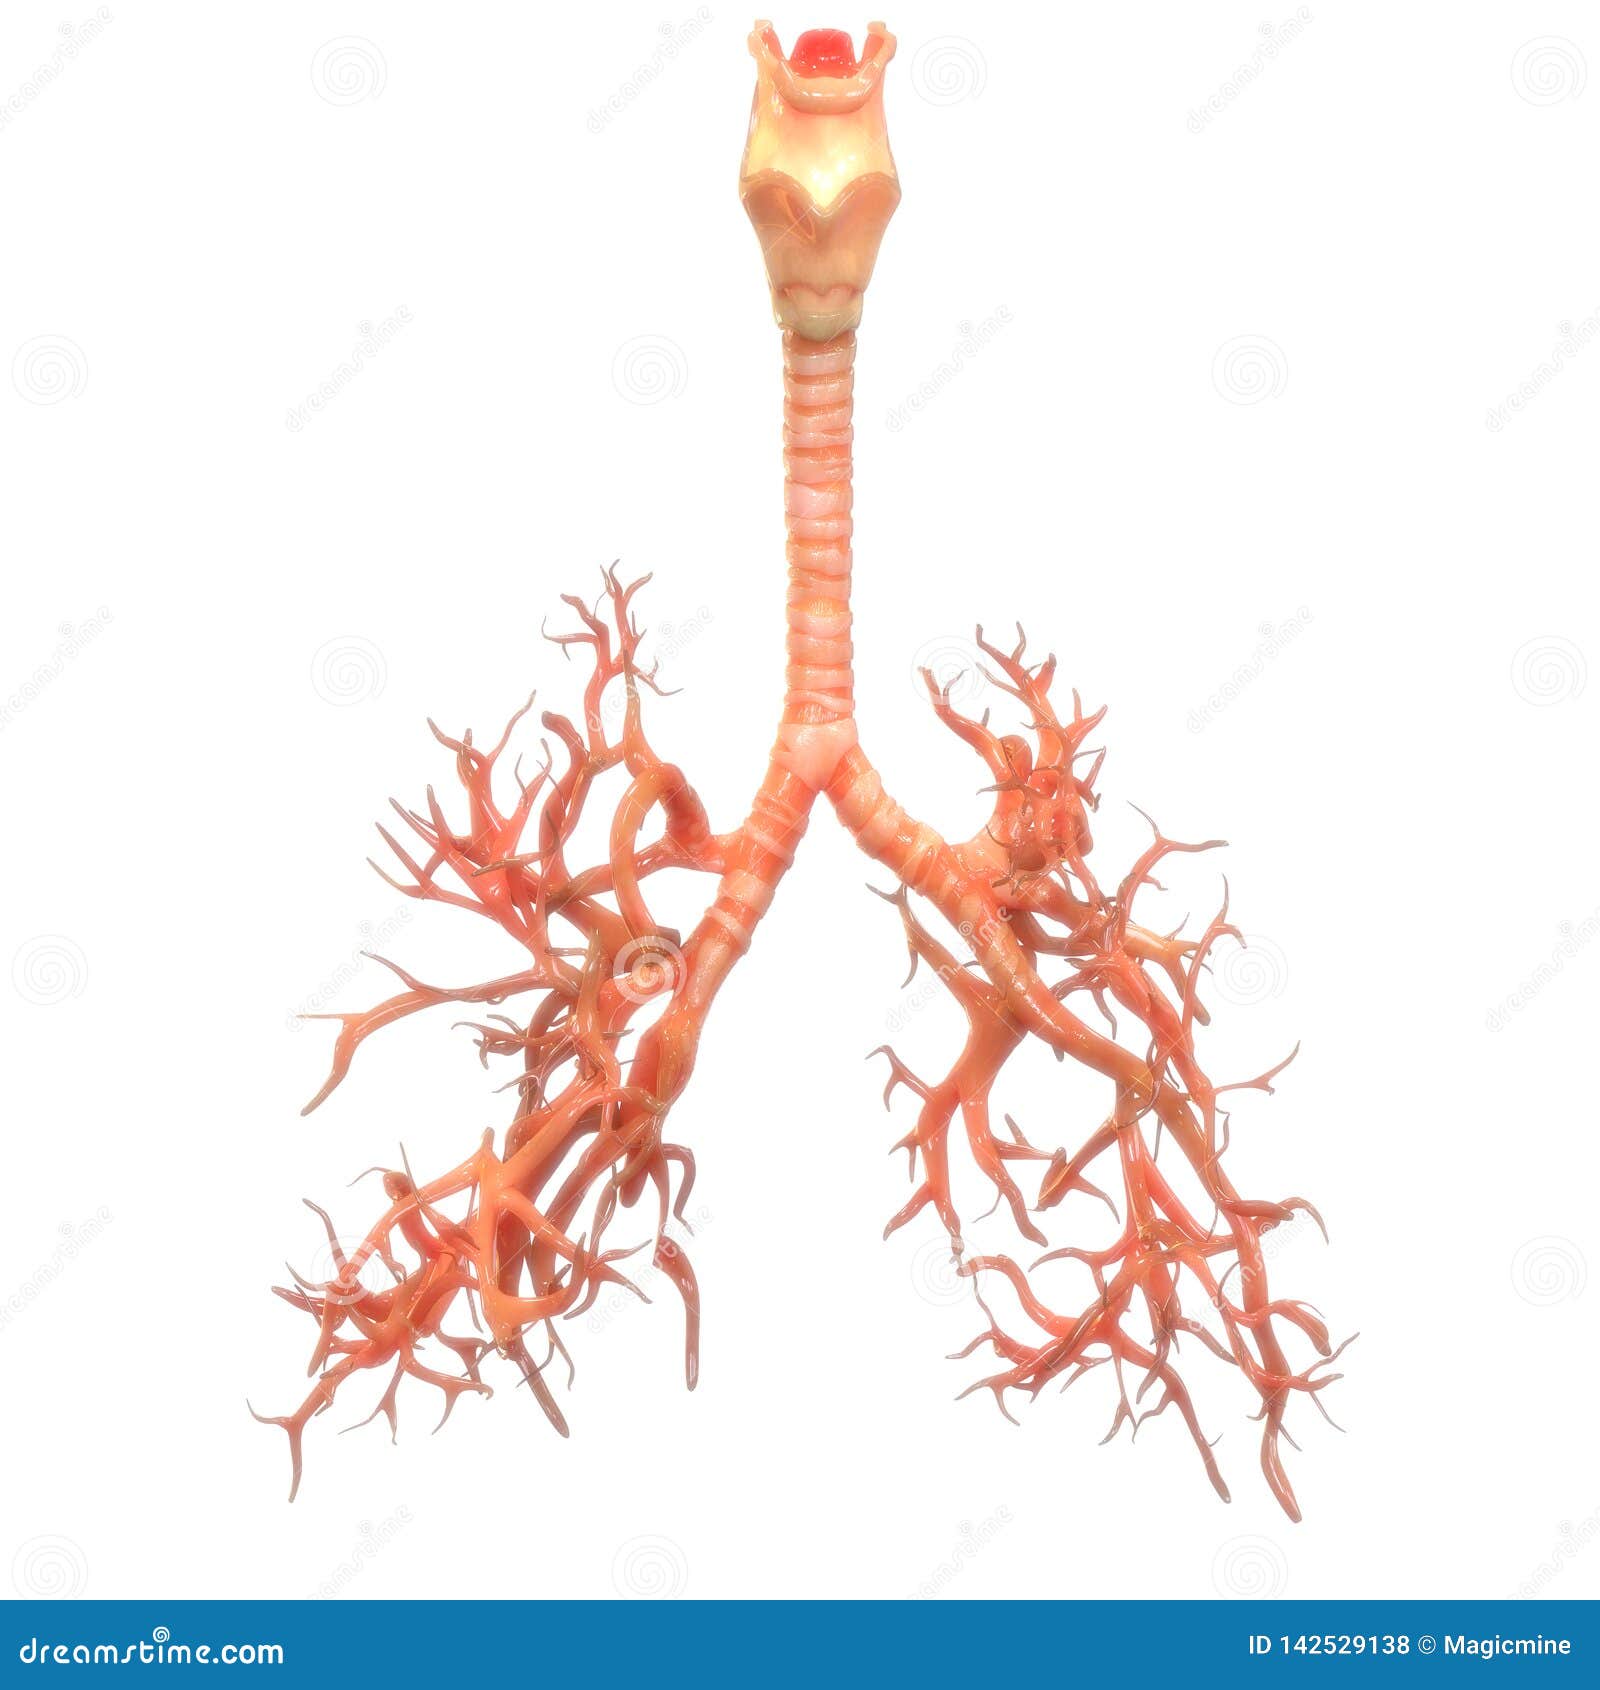 Human Body Organs Respiratory System Lungs Anatomy Stock